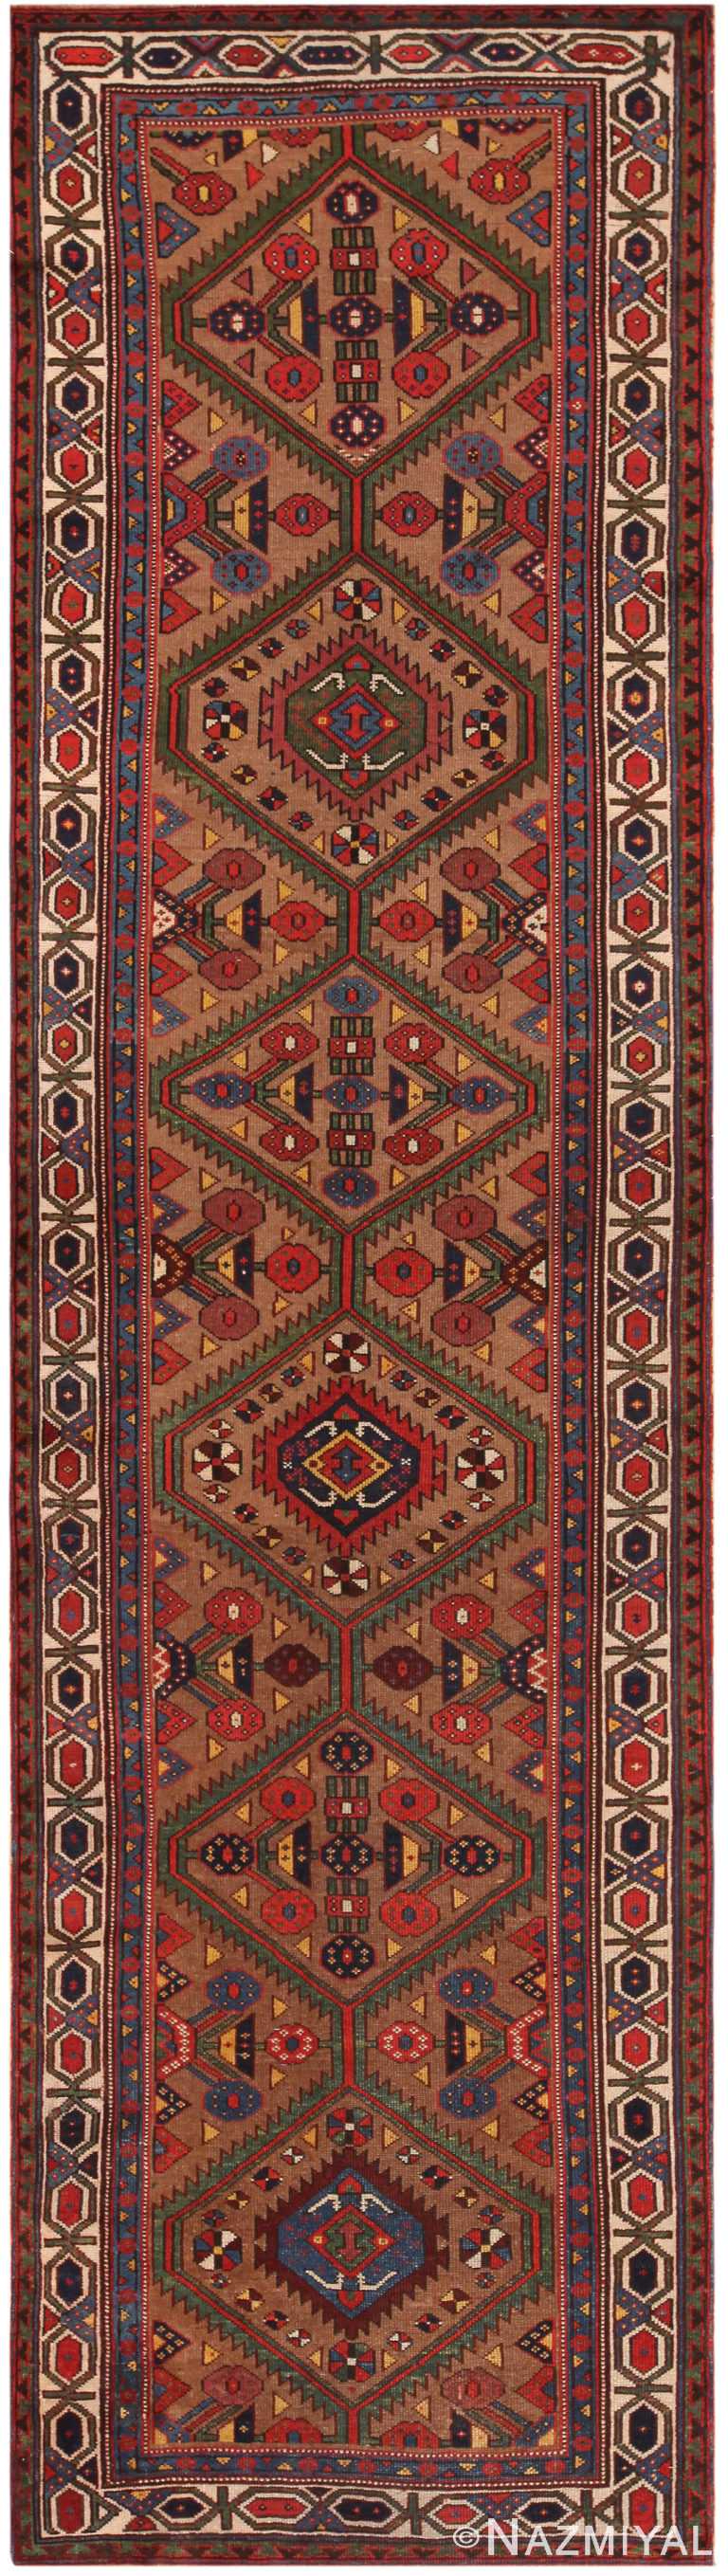 Antique Persian Serab Geometric Runner Rug 72049 by Nazmiyal Antique Rugs